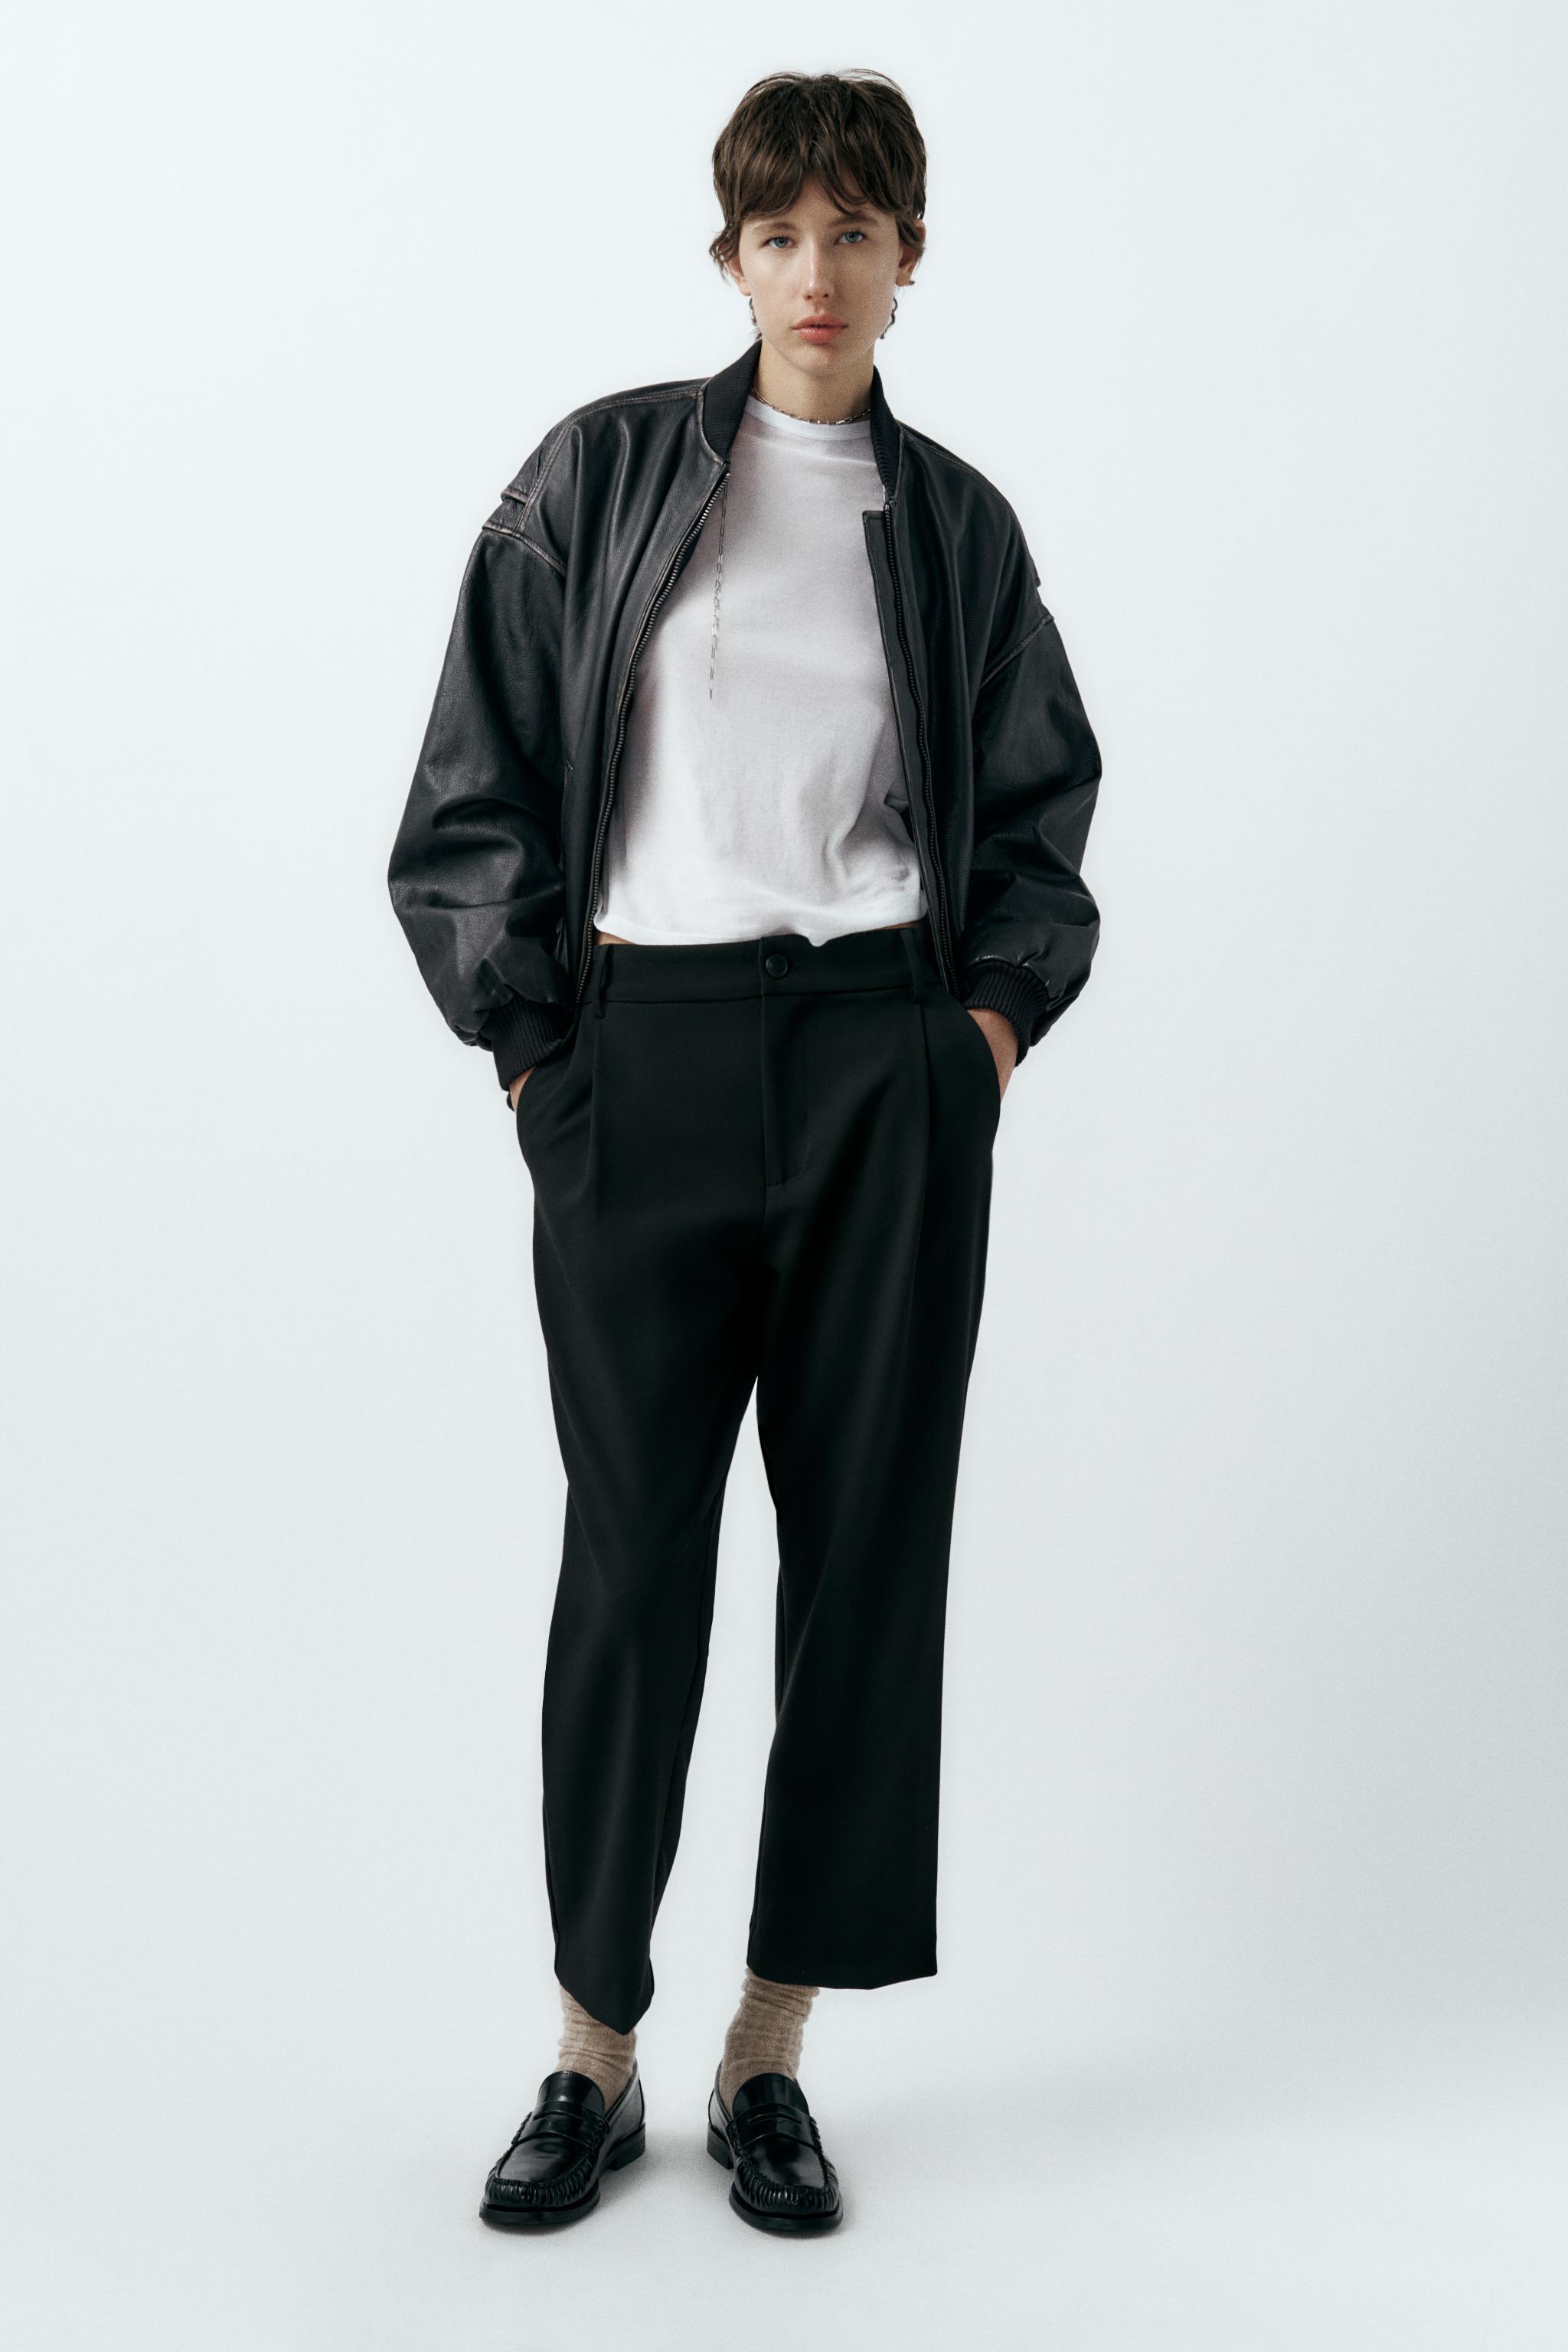 Pre-owned Zara X Rhuigi Rhude Cargo Pants Black Sz L Large Brand W/ Tags In  Hand